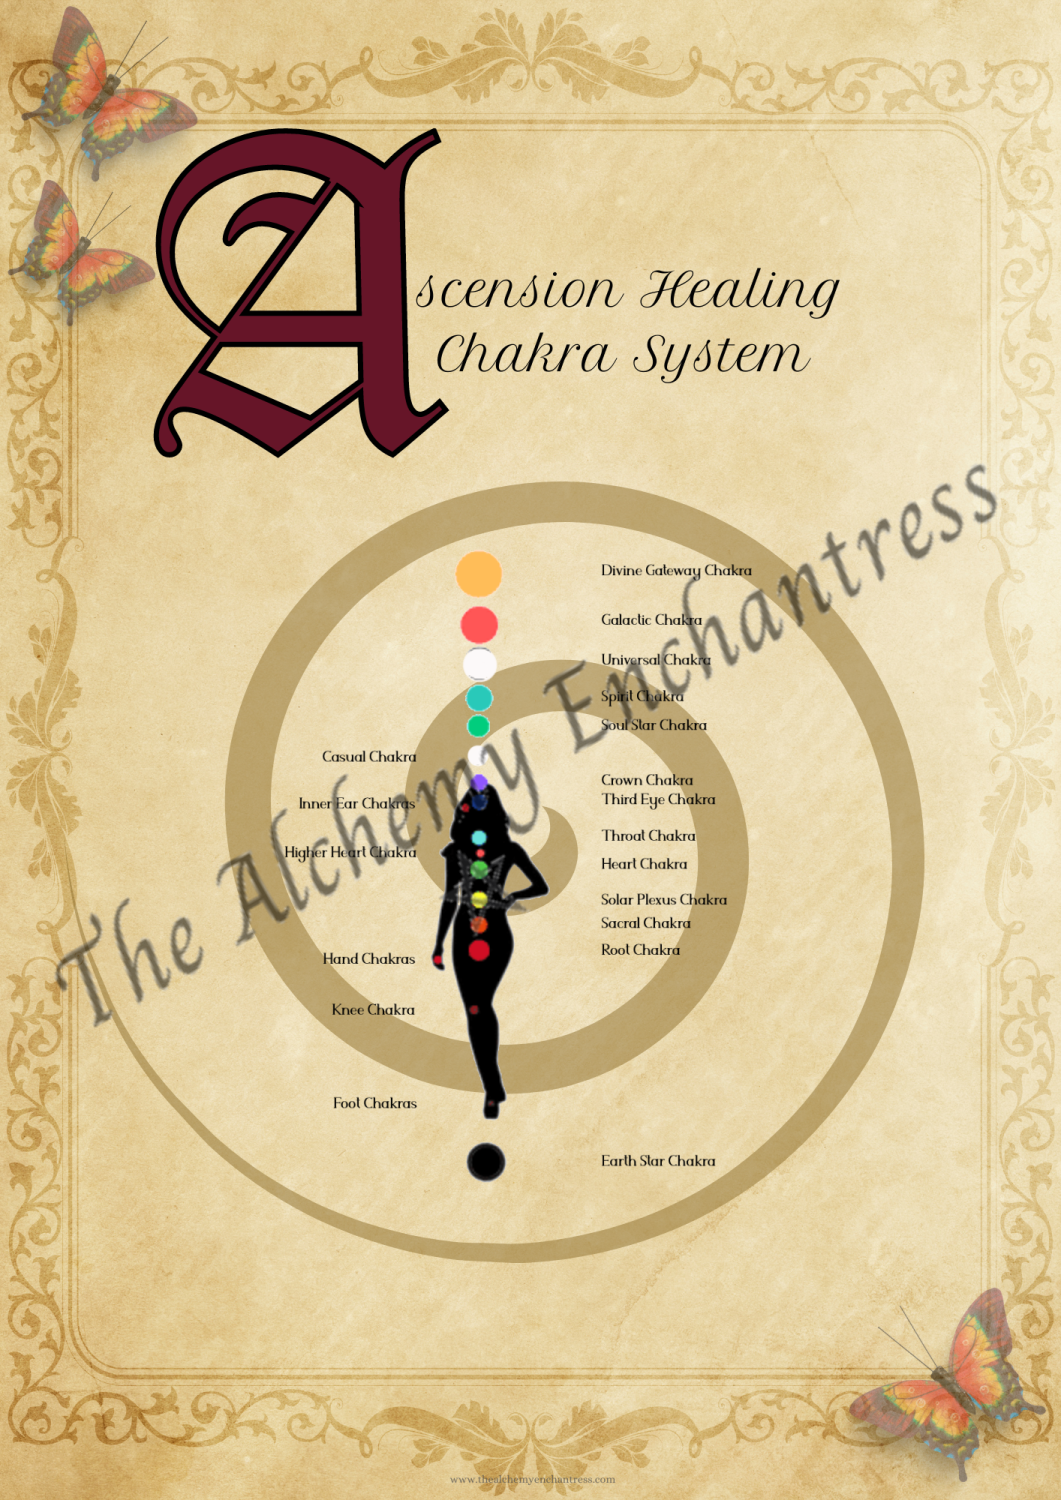 Ascension Healing Chakra System Diagram 